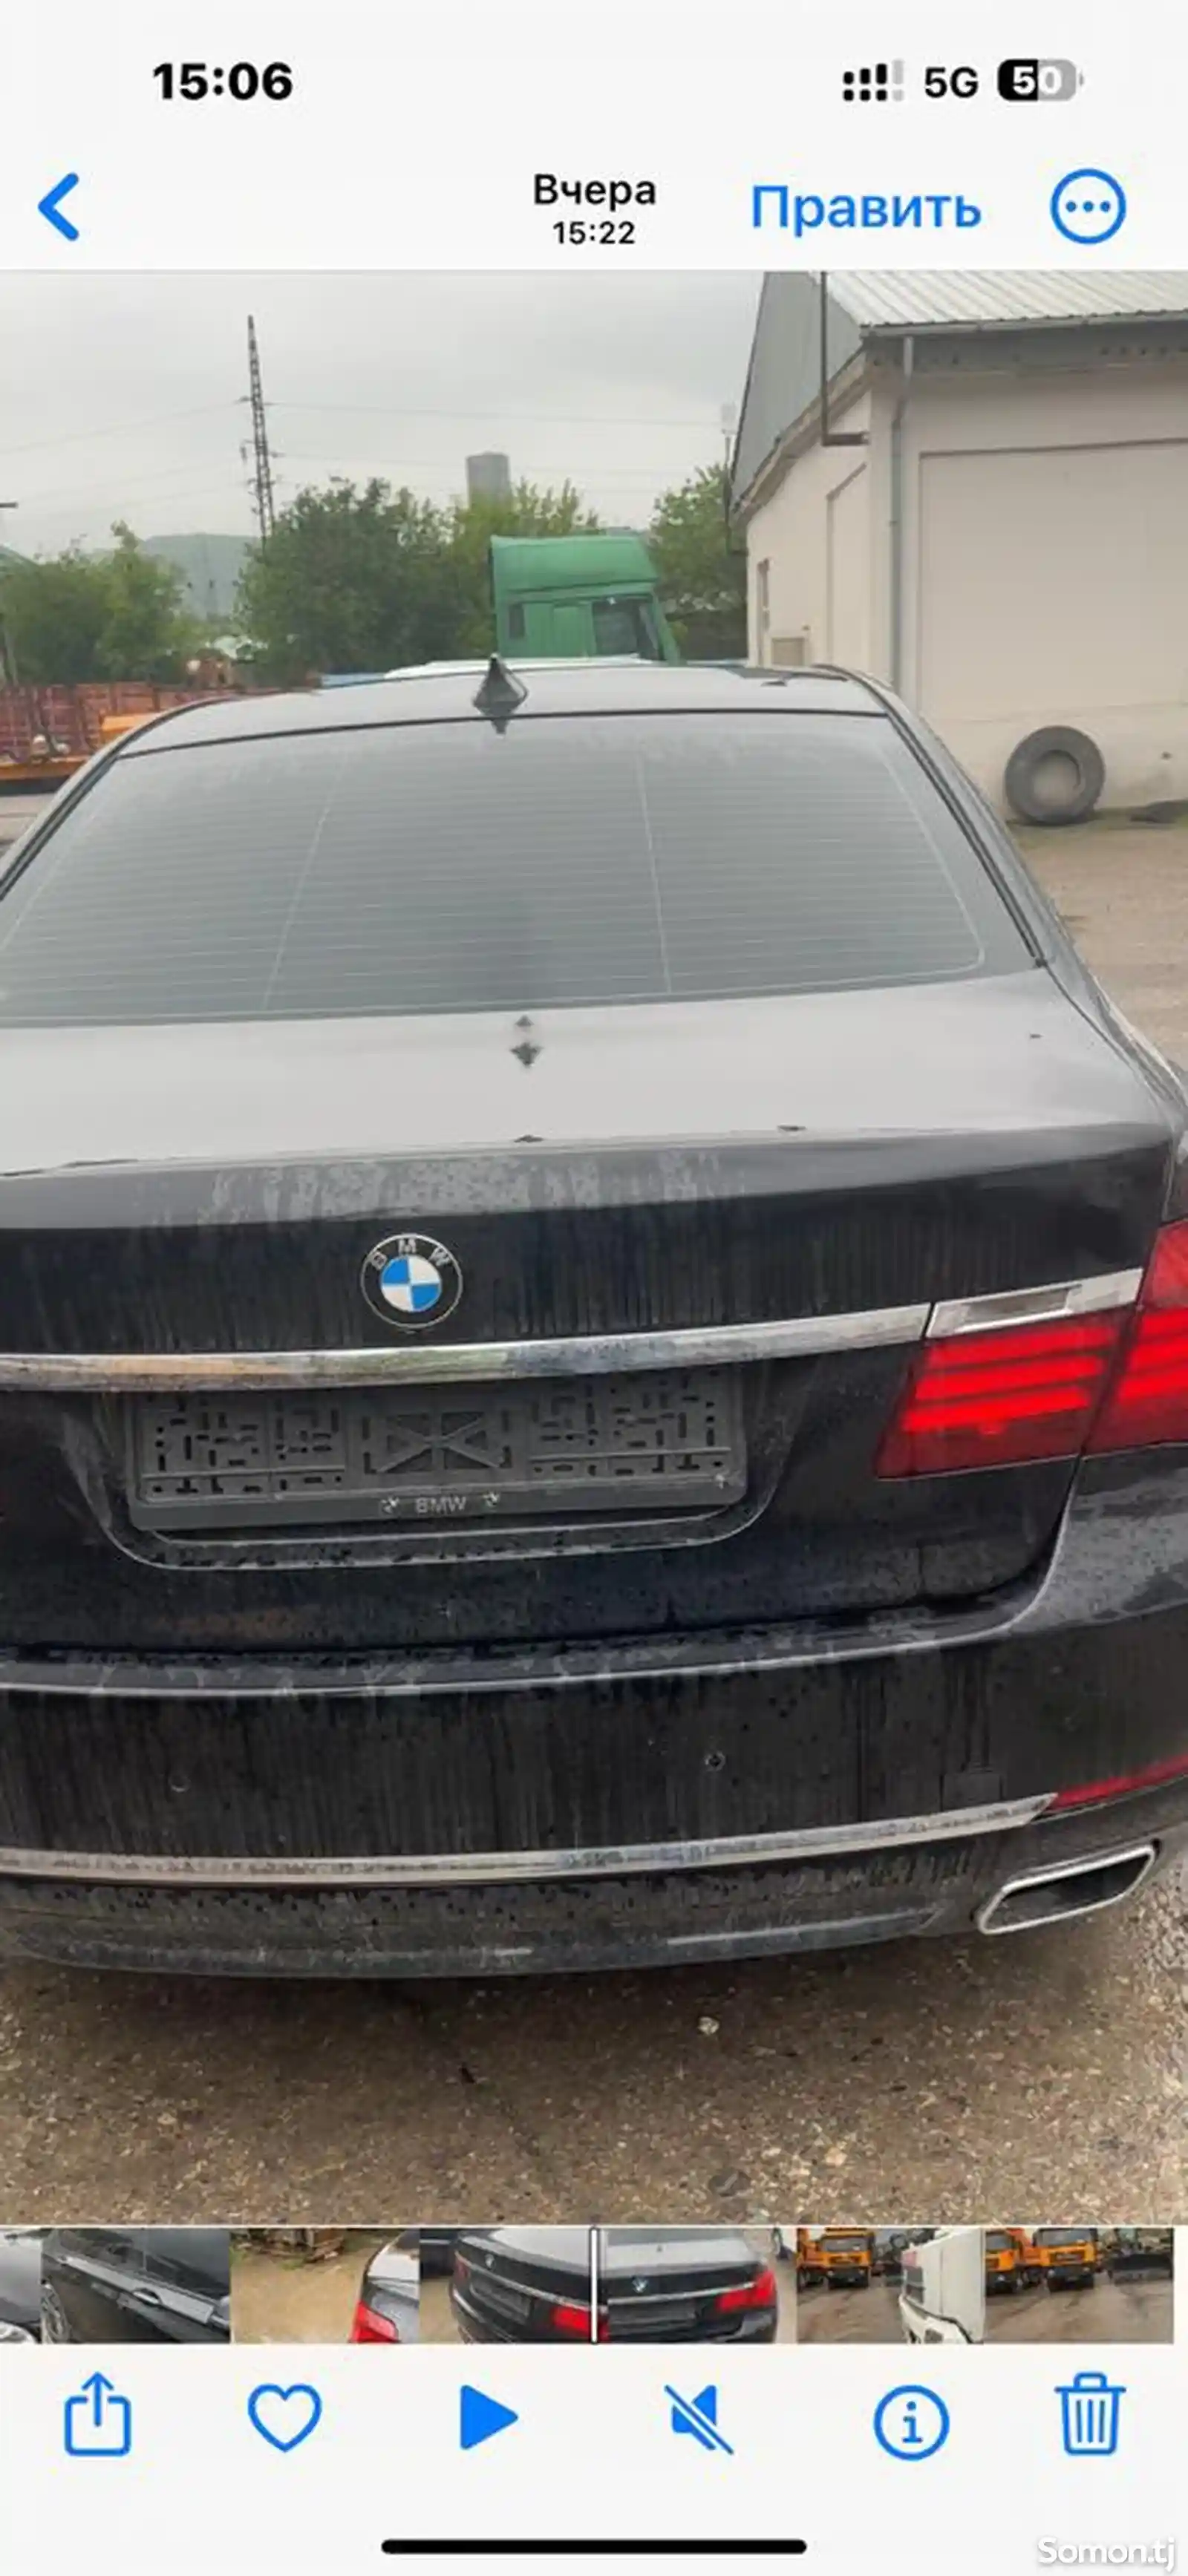 BMW 7 series, 2014-11